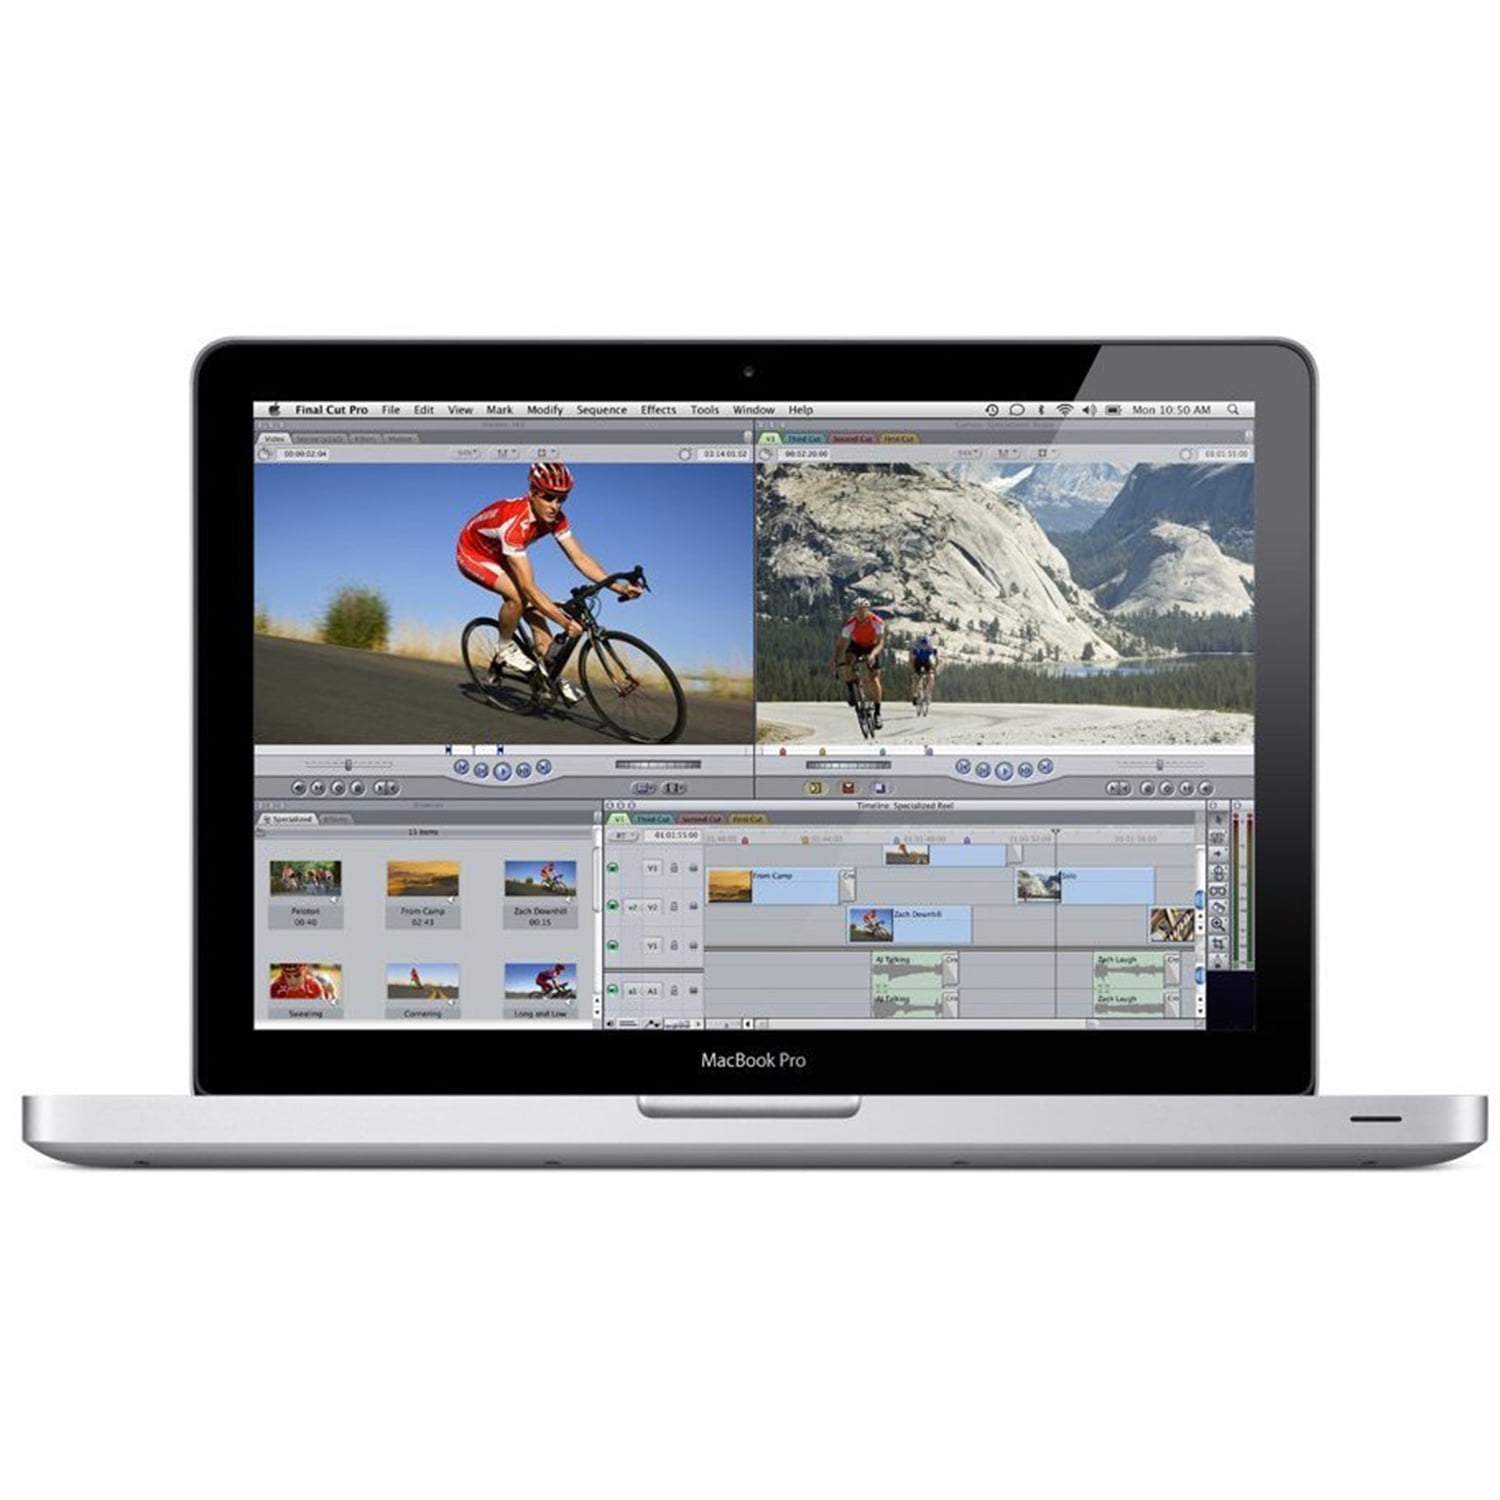 Apple MacBook Pro 13.3'' MC700ll/A Laptop Computer Intel i5 Dual Core  2.3GHz 4GB 320GB ( Used - Grade C )